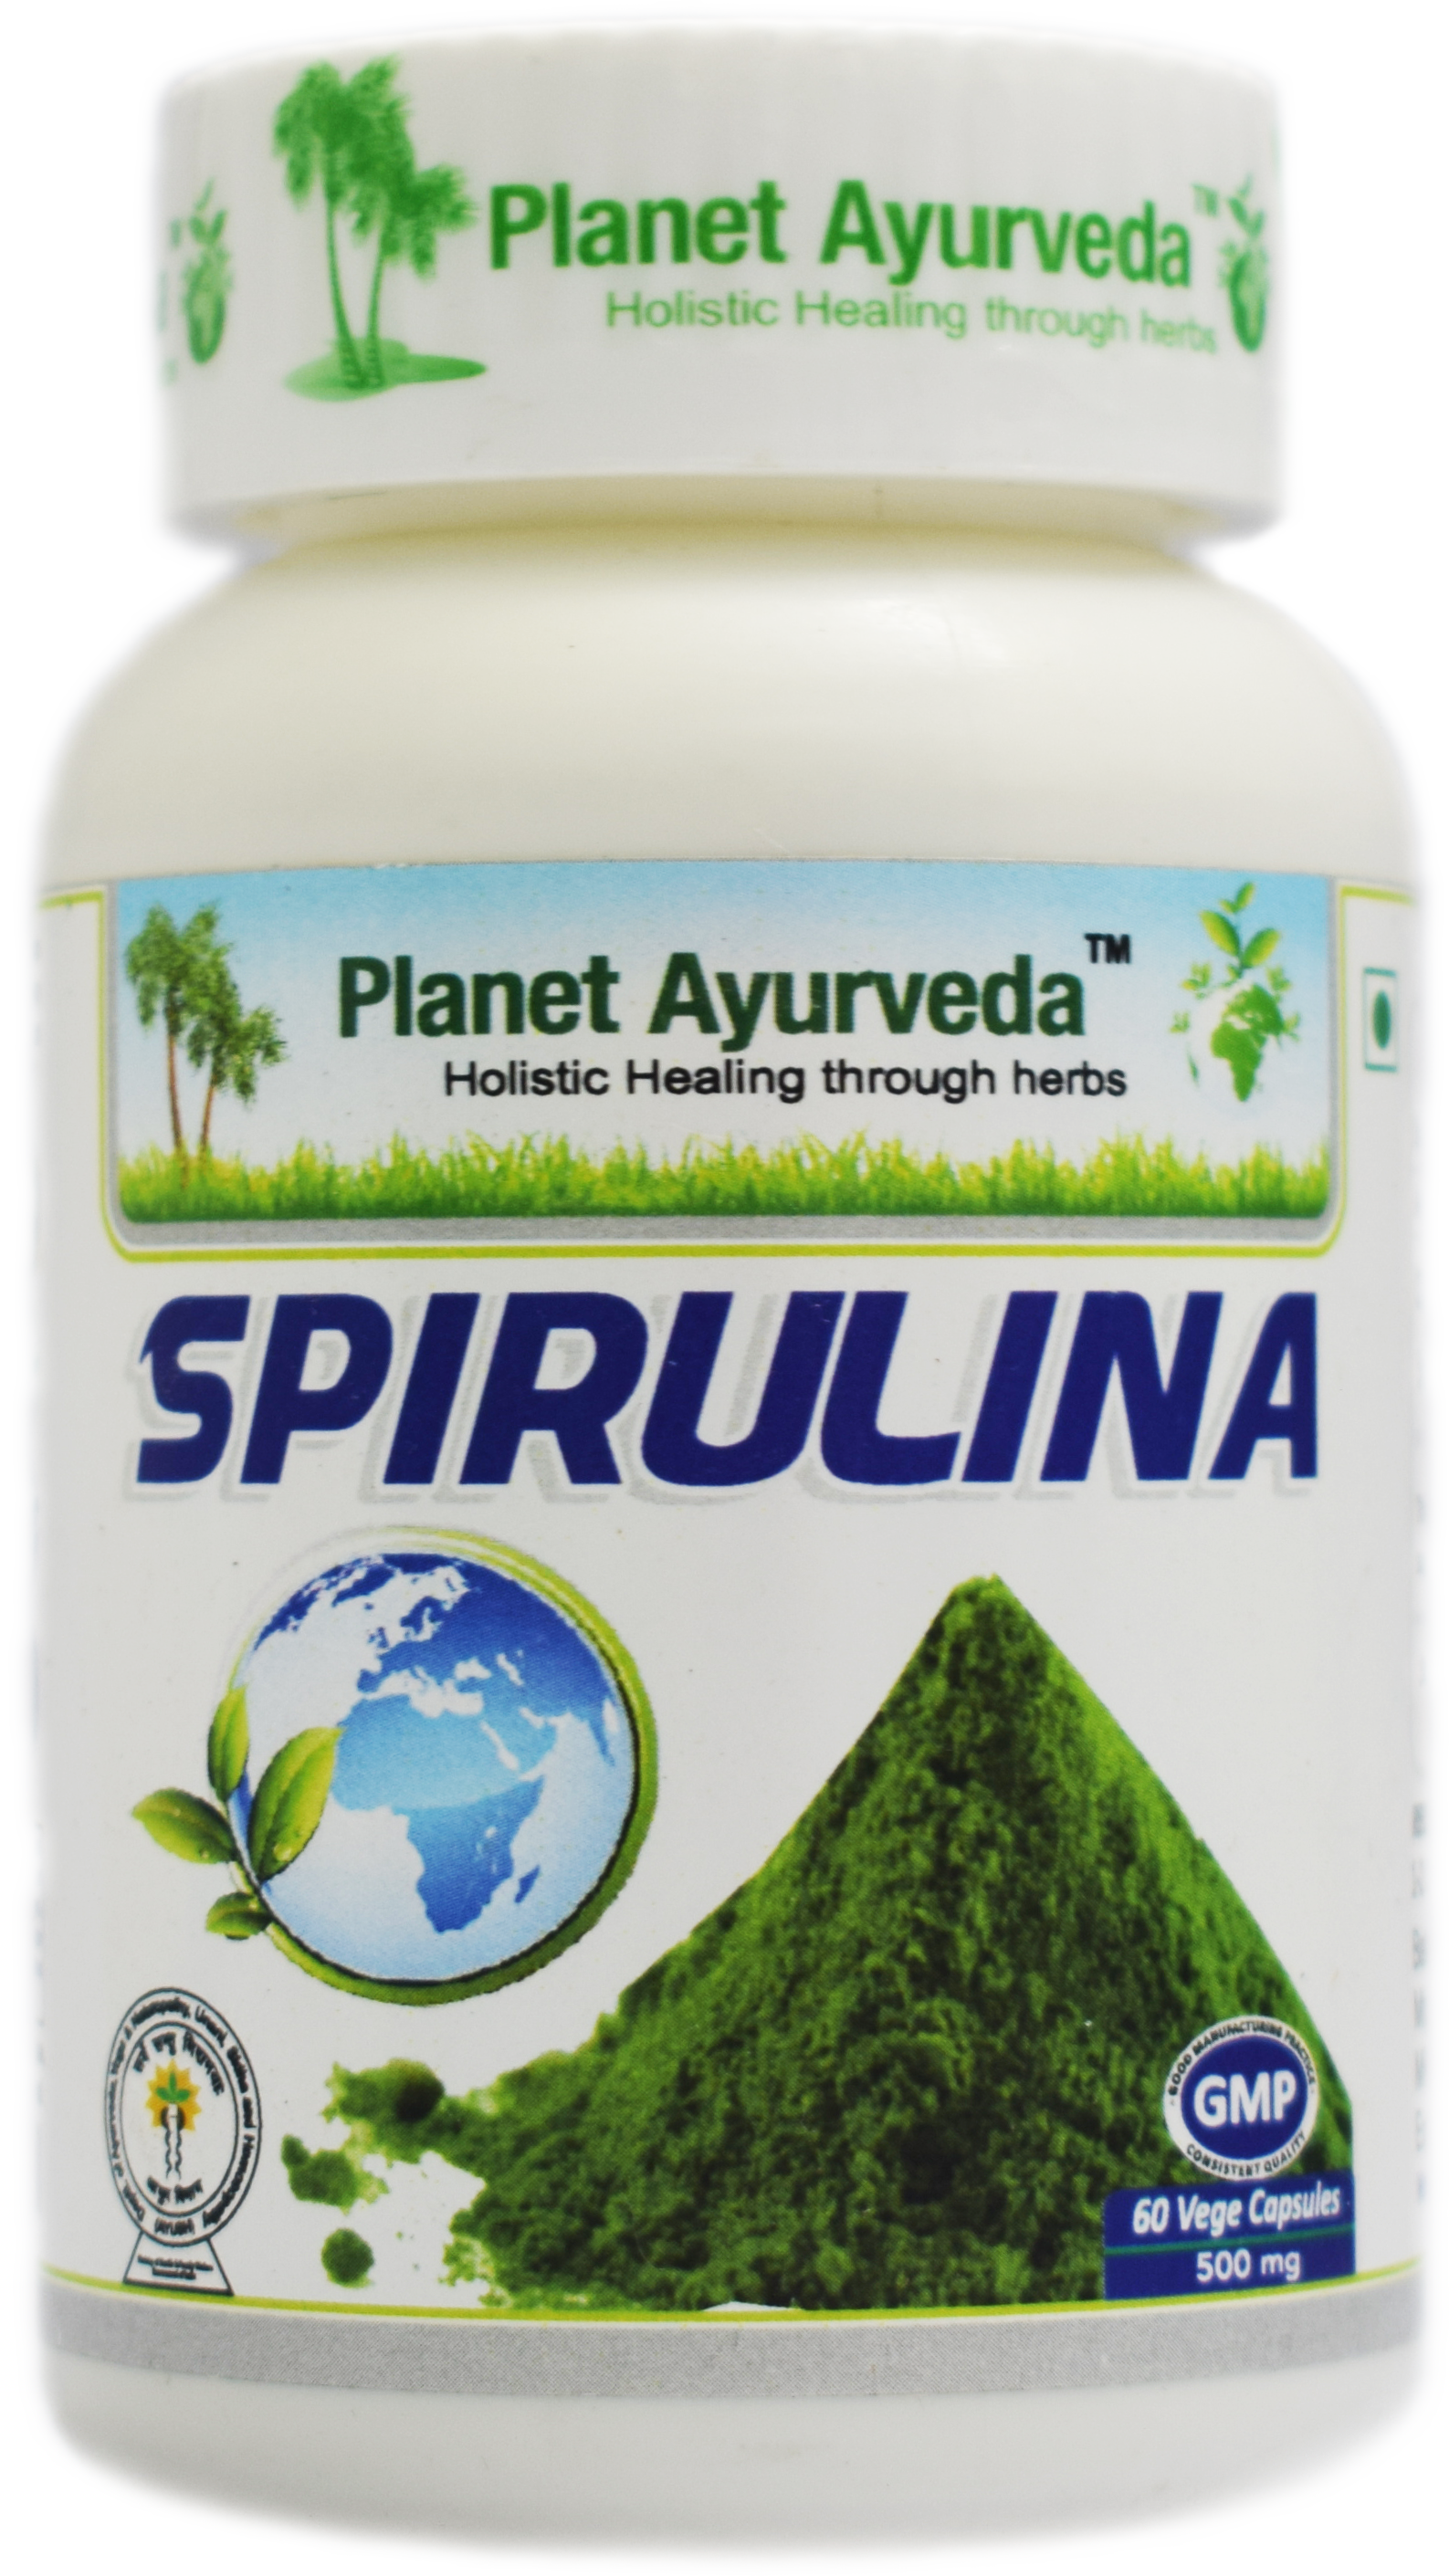 Buy Planet Ayurveda Spirulina Capsules at Best Price Online